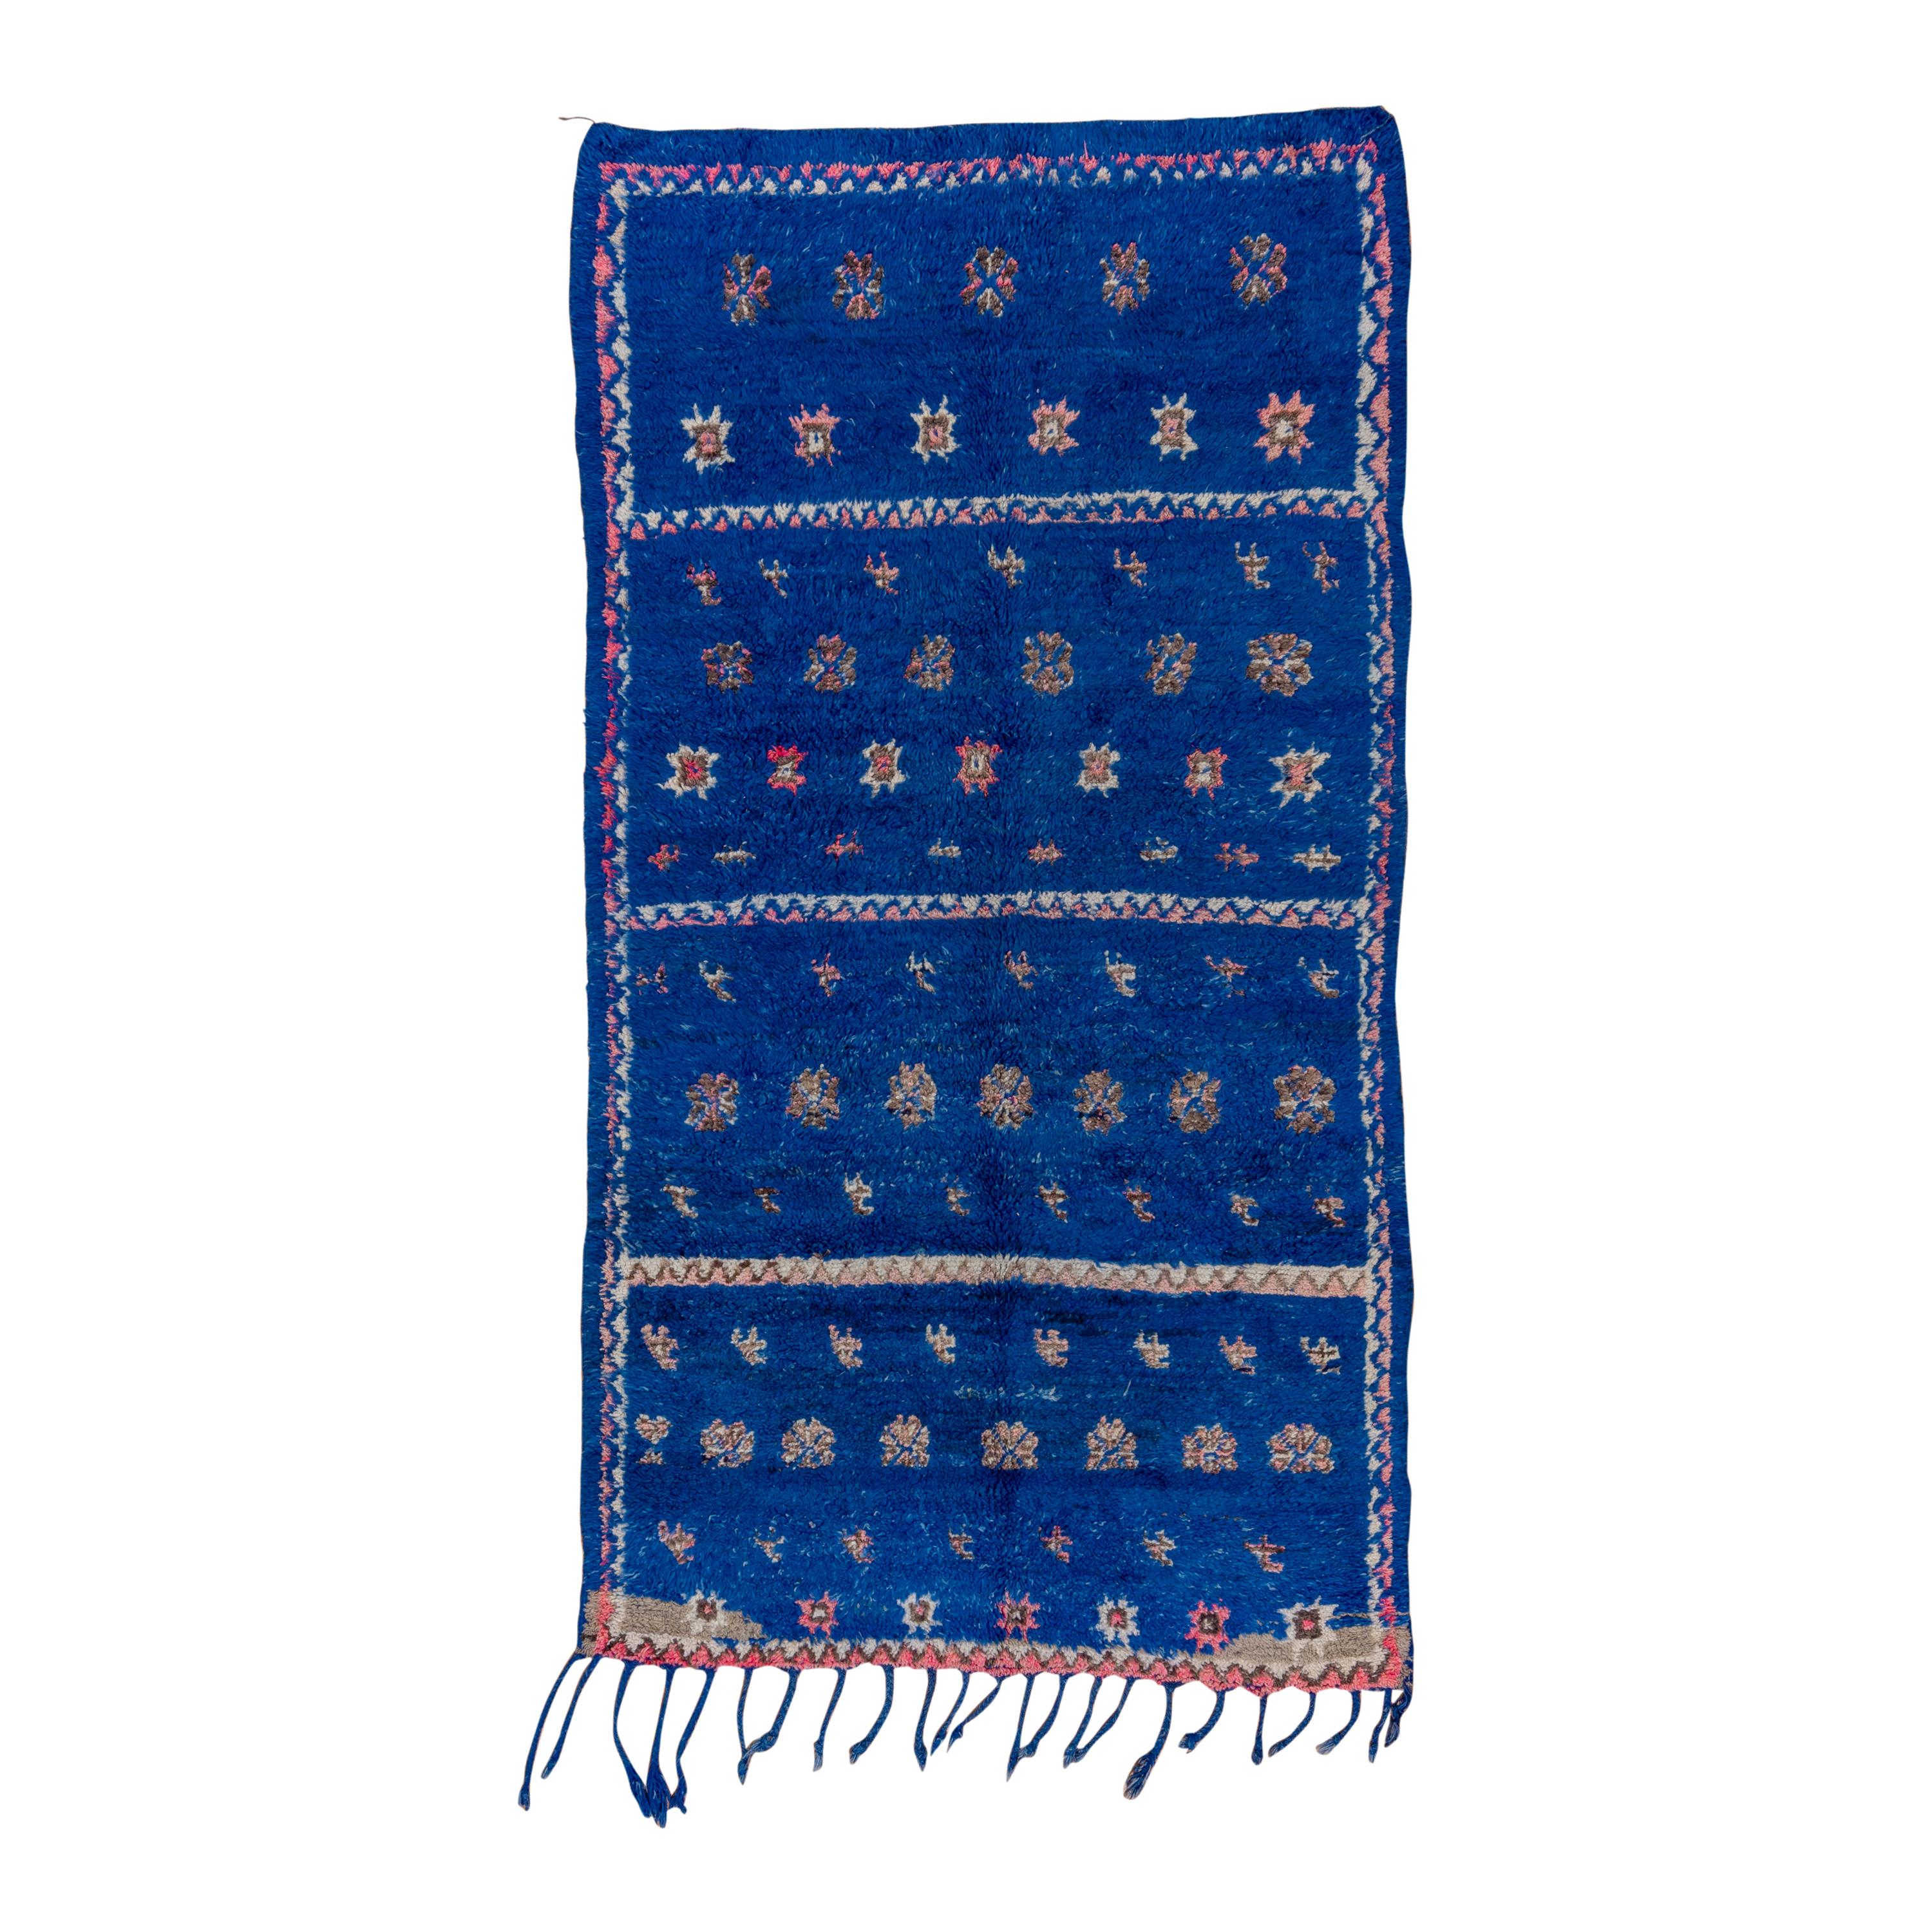 Blue Vintage Moroccan Carpet